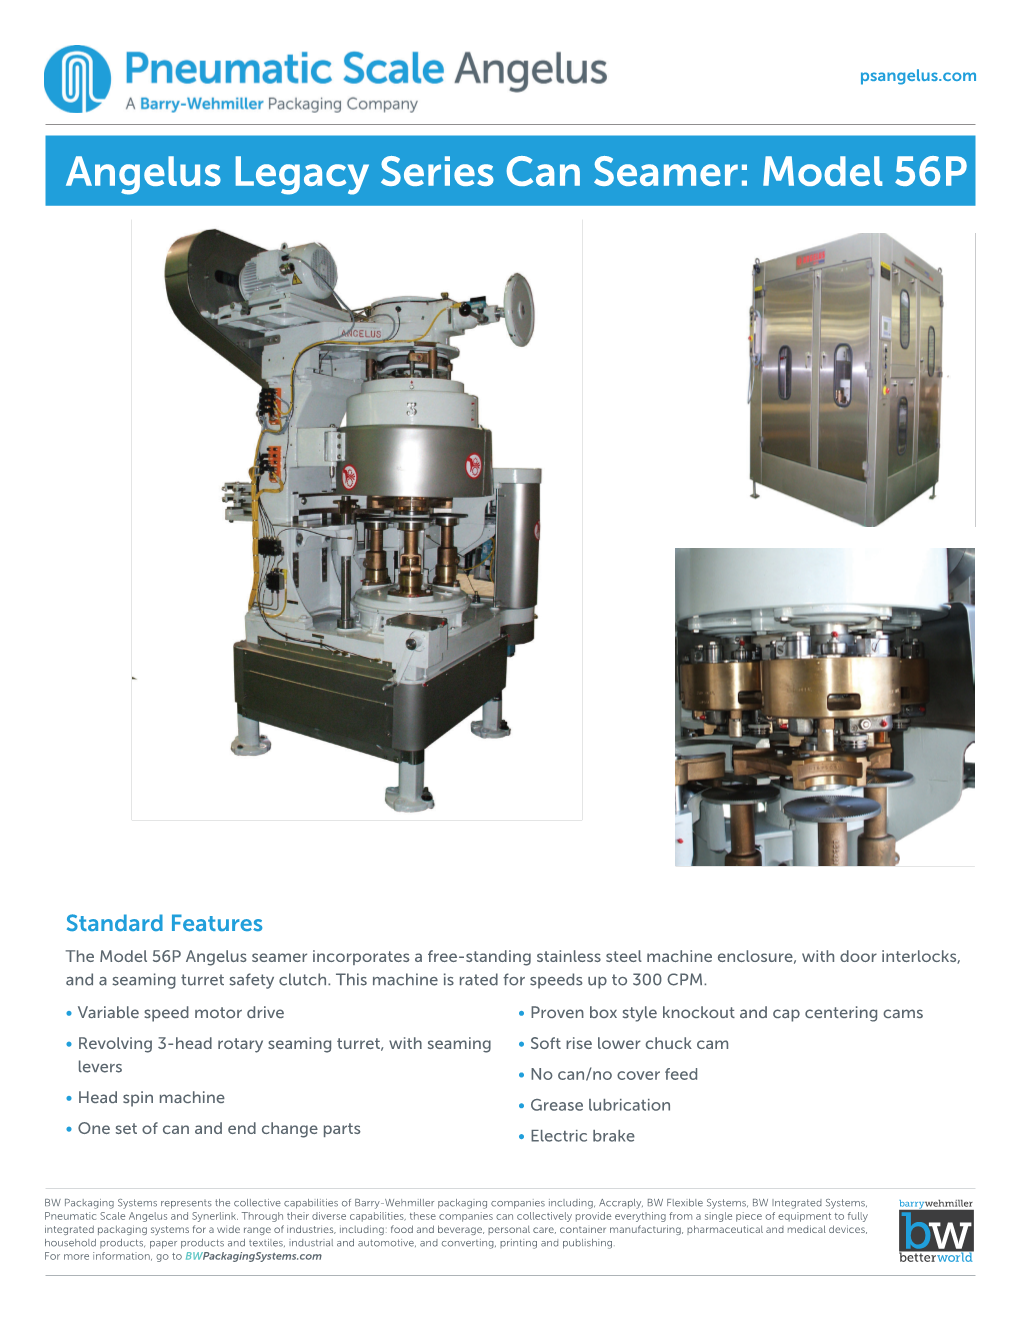 Angelus Legacy Series Can Seamer: Model 56P